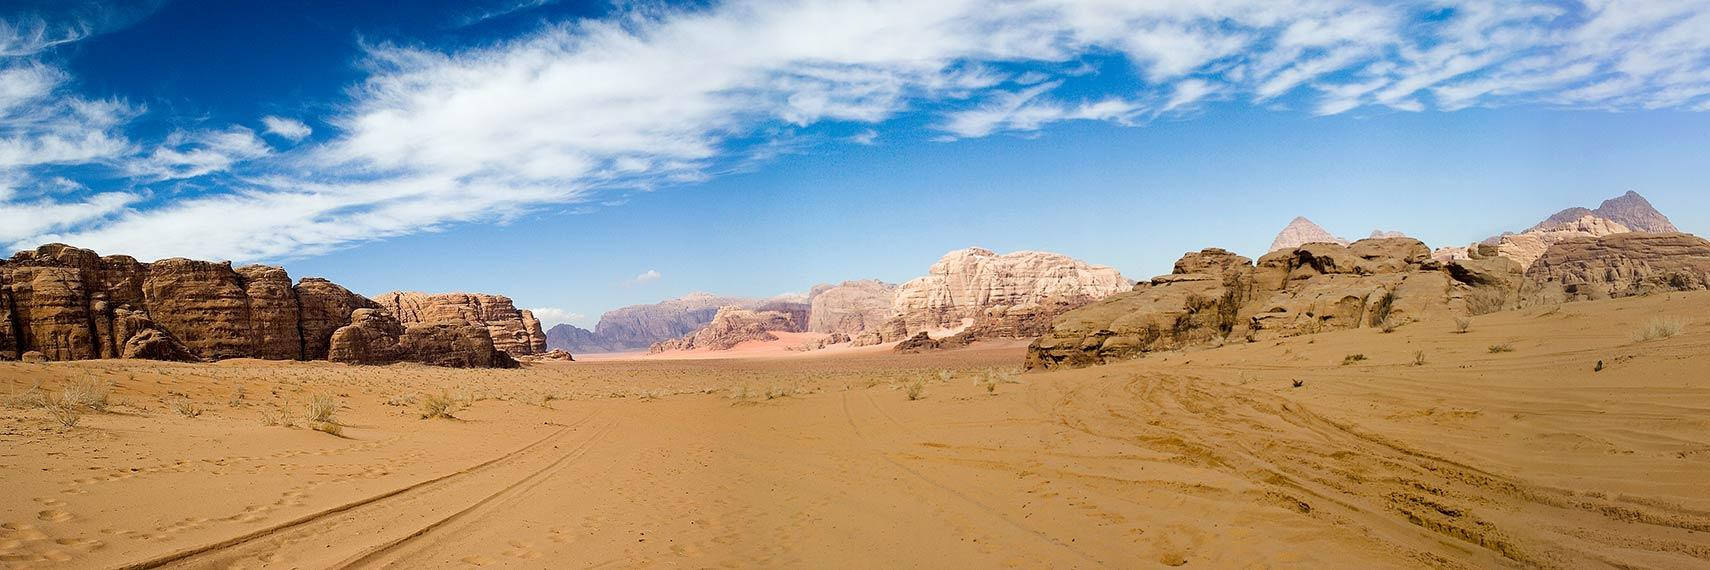 Jordan Desert Wilderness Wallpaper